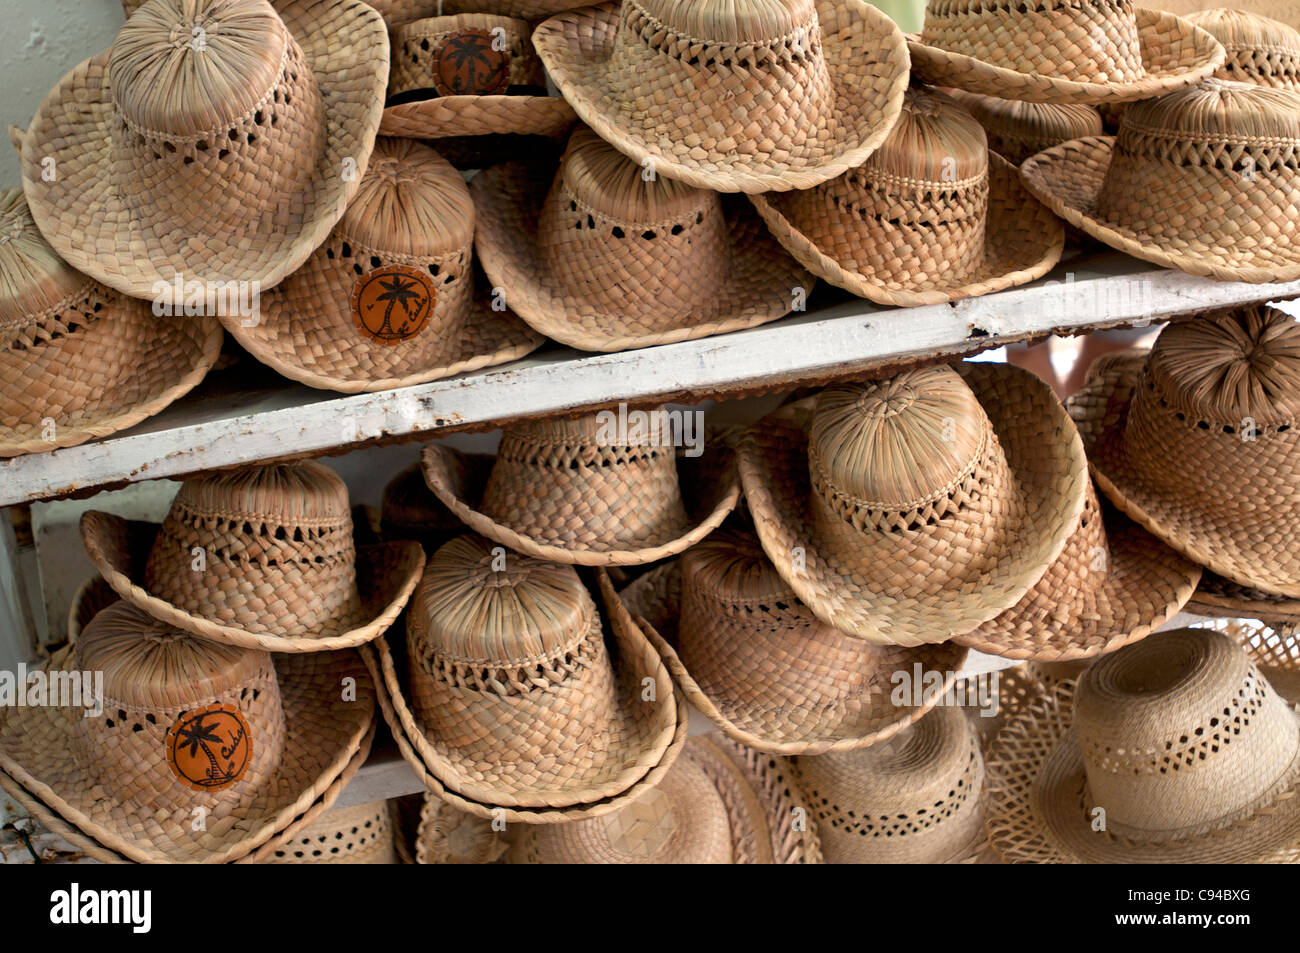 Straw hats for sale in market, Varadero, Cuba Stock Photo